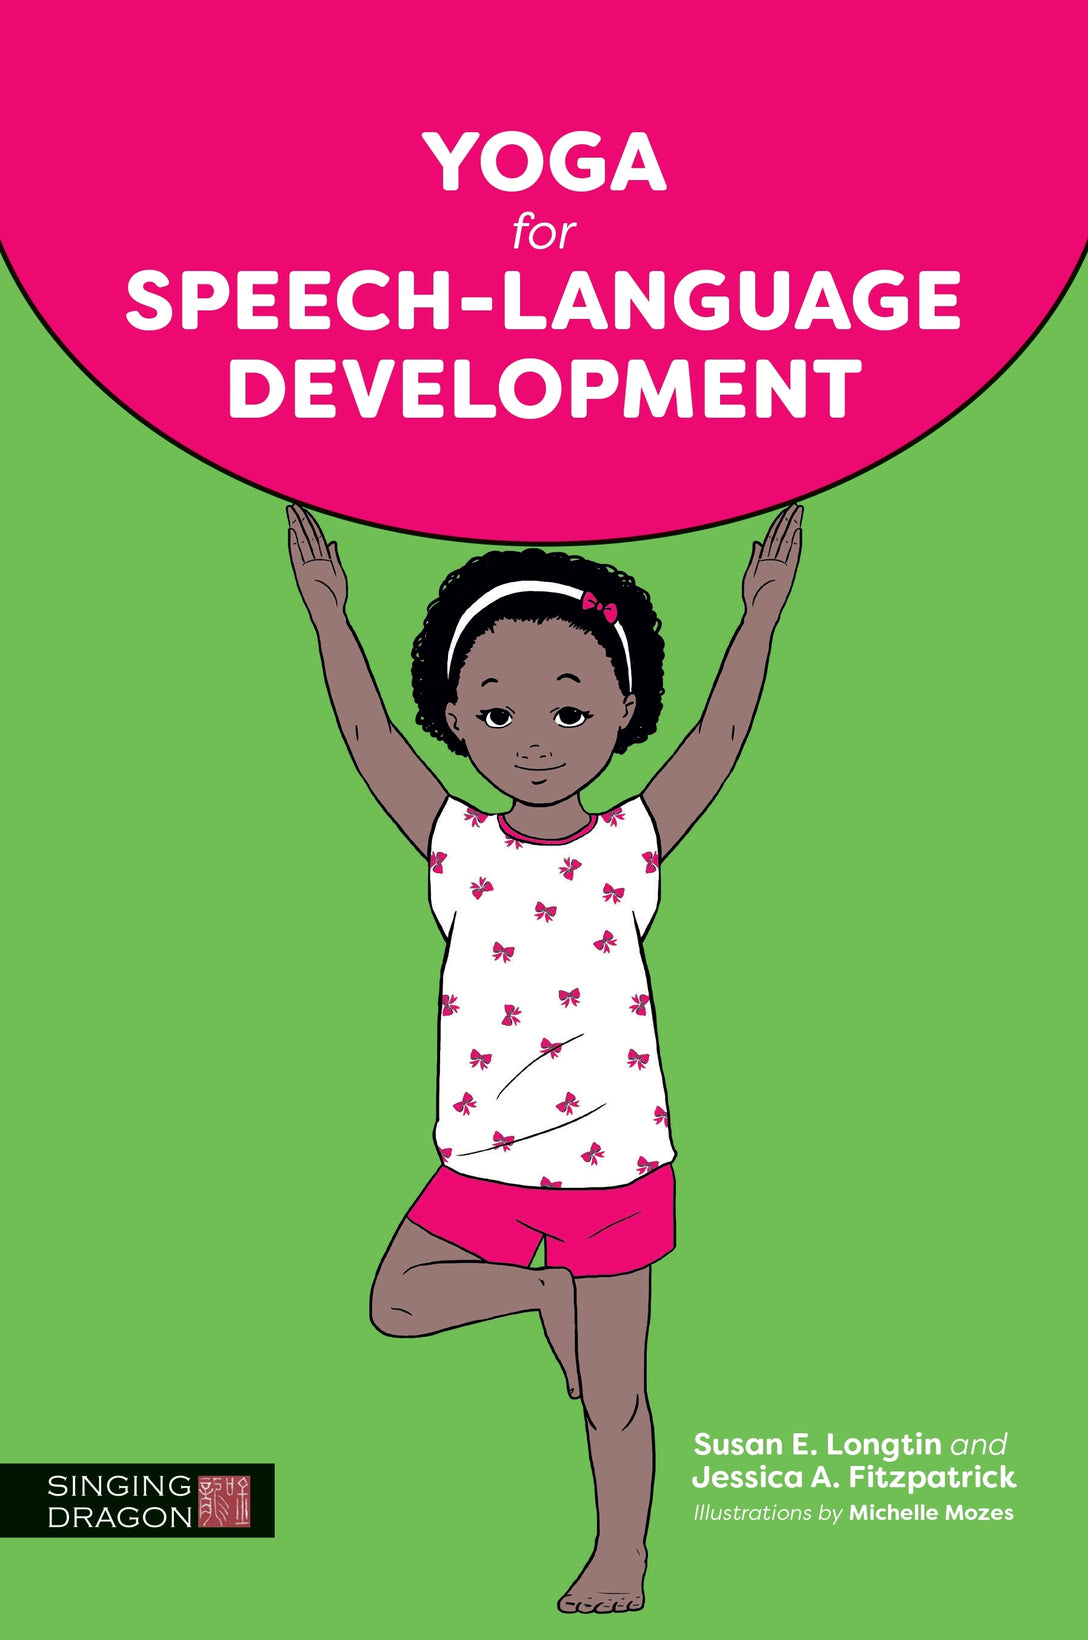 Yoga for Speech-Language Development by Michelle Mozes, Susan E. Longtin, Jessica A. Fitzpatrick